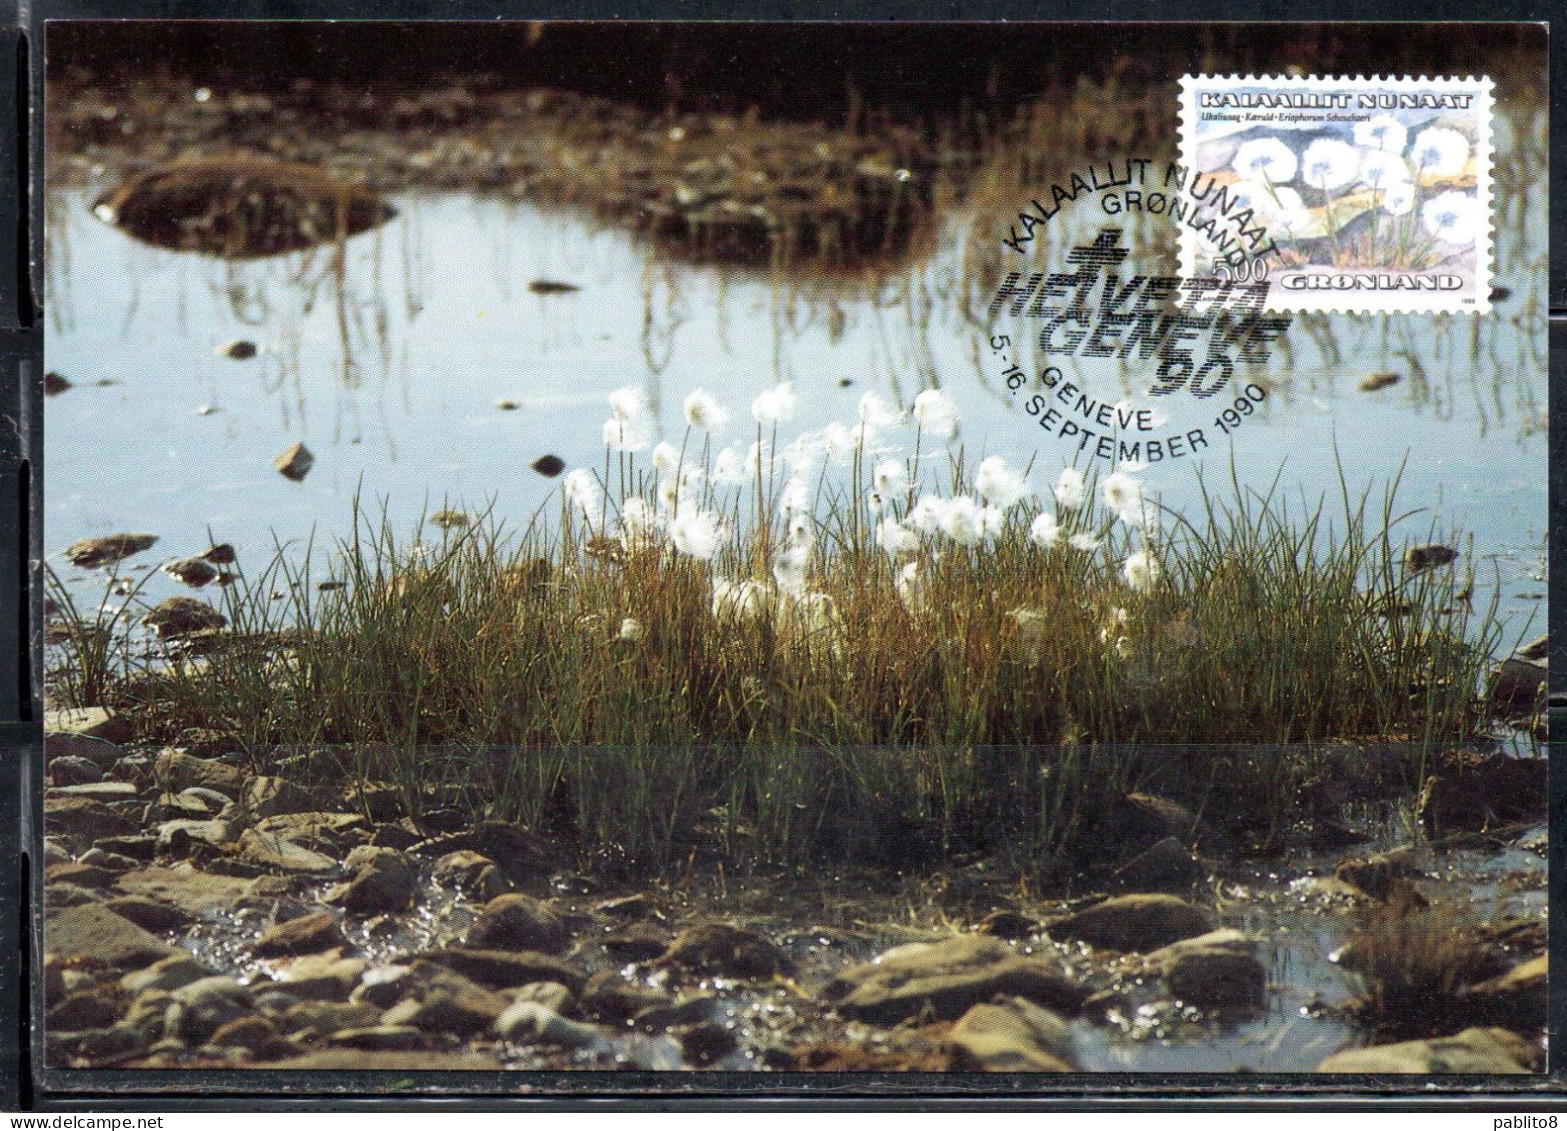 GREENLAND GRONLANDS GROENLANDIA GRØNLAND 1989 1992 1990 FLORA PLANTS ERIOPHORUM SCHEUCHZERI 5k MAXI MAXIMUM CARD CARTE - Cartes-Maximum (CM)